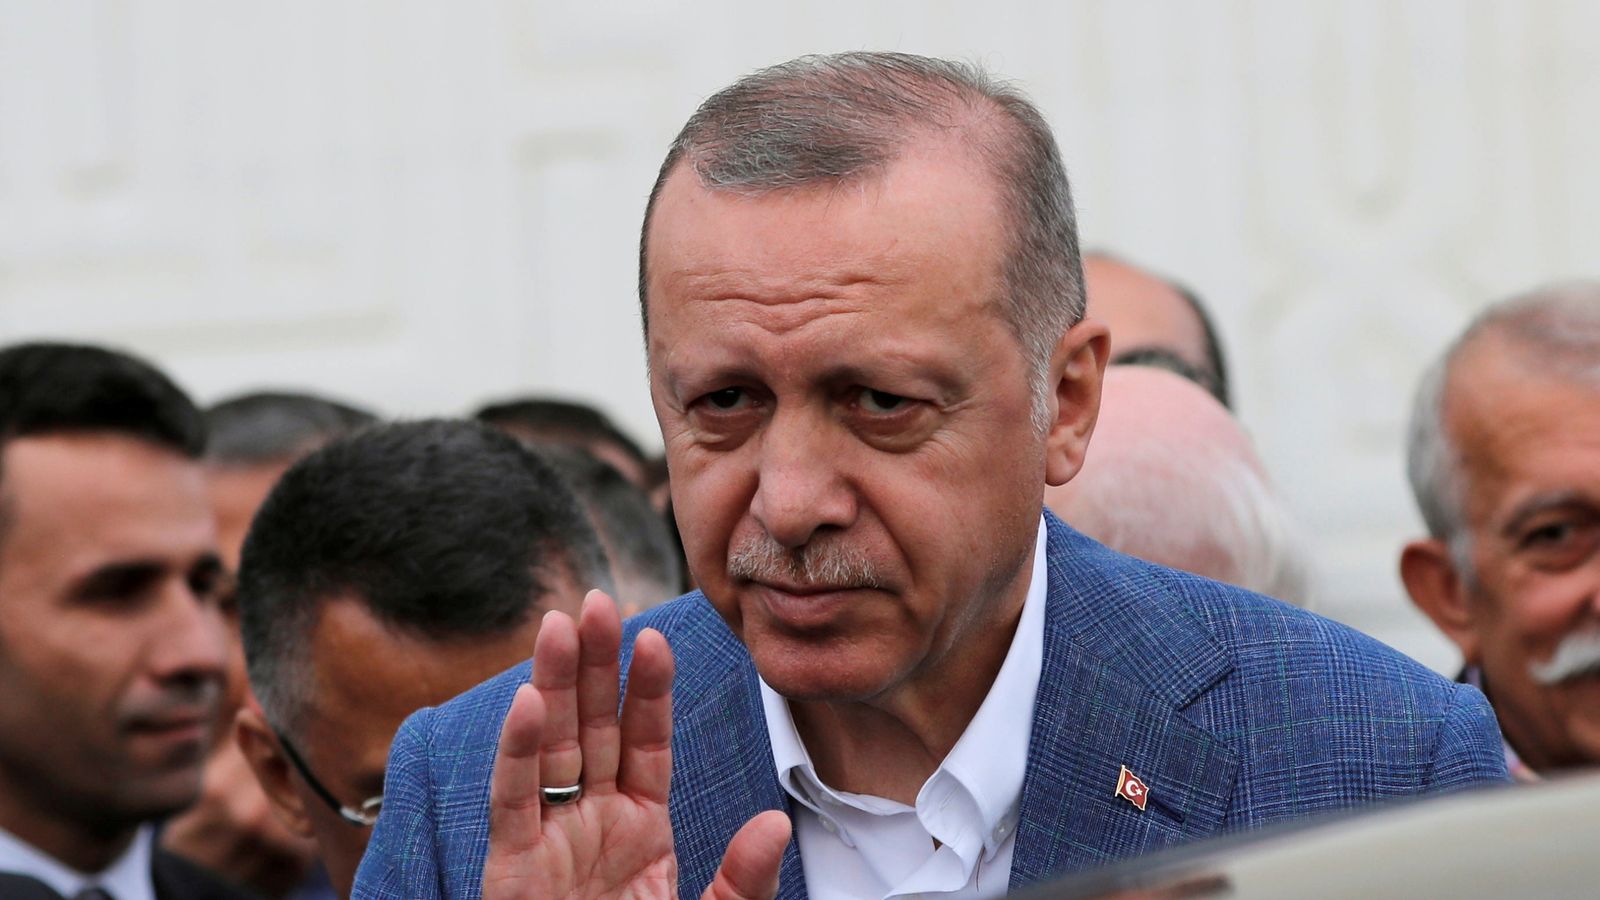 Recep Tayyip Erdogan no longer appears invincible after bruising election result | World News | Sky News